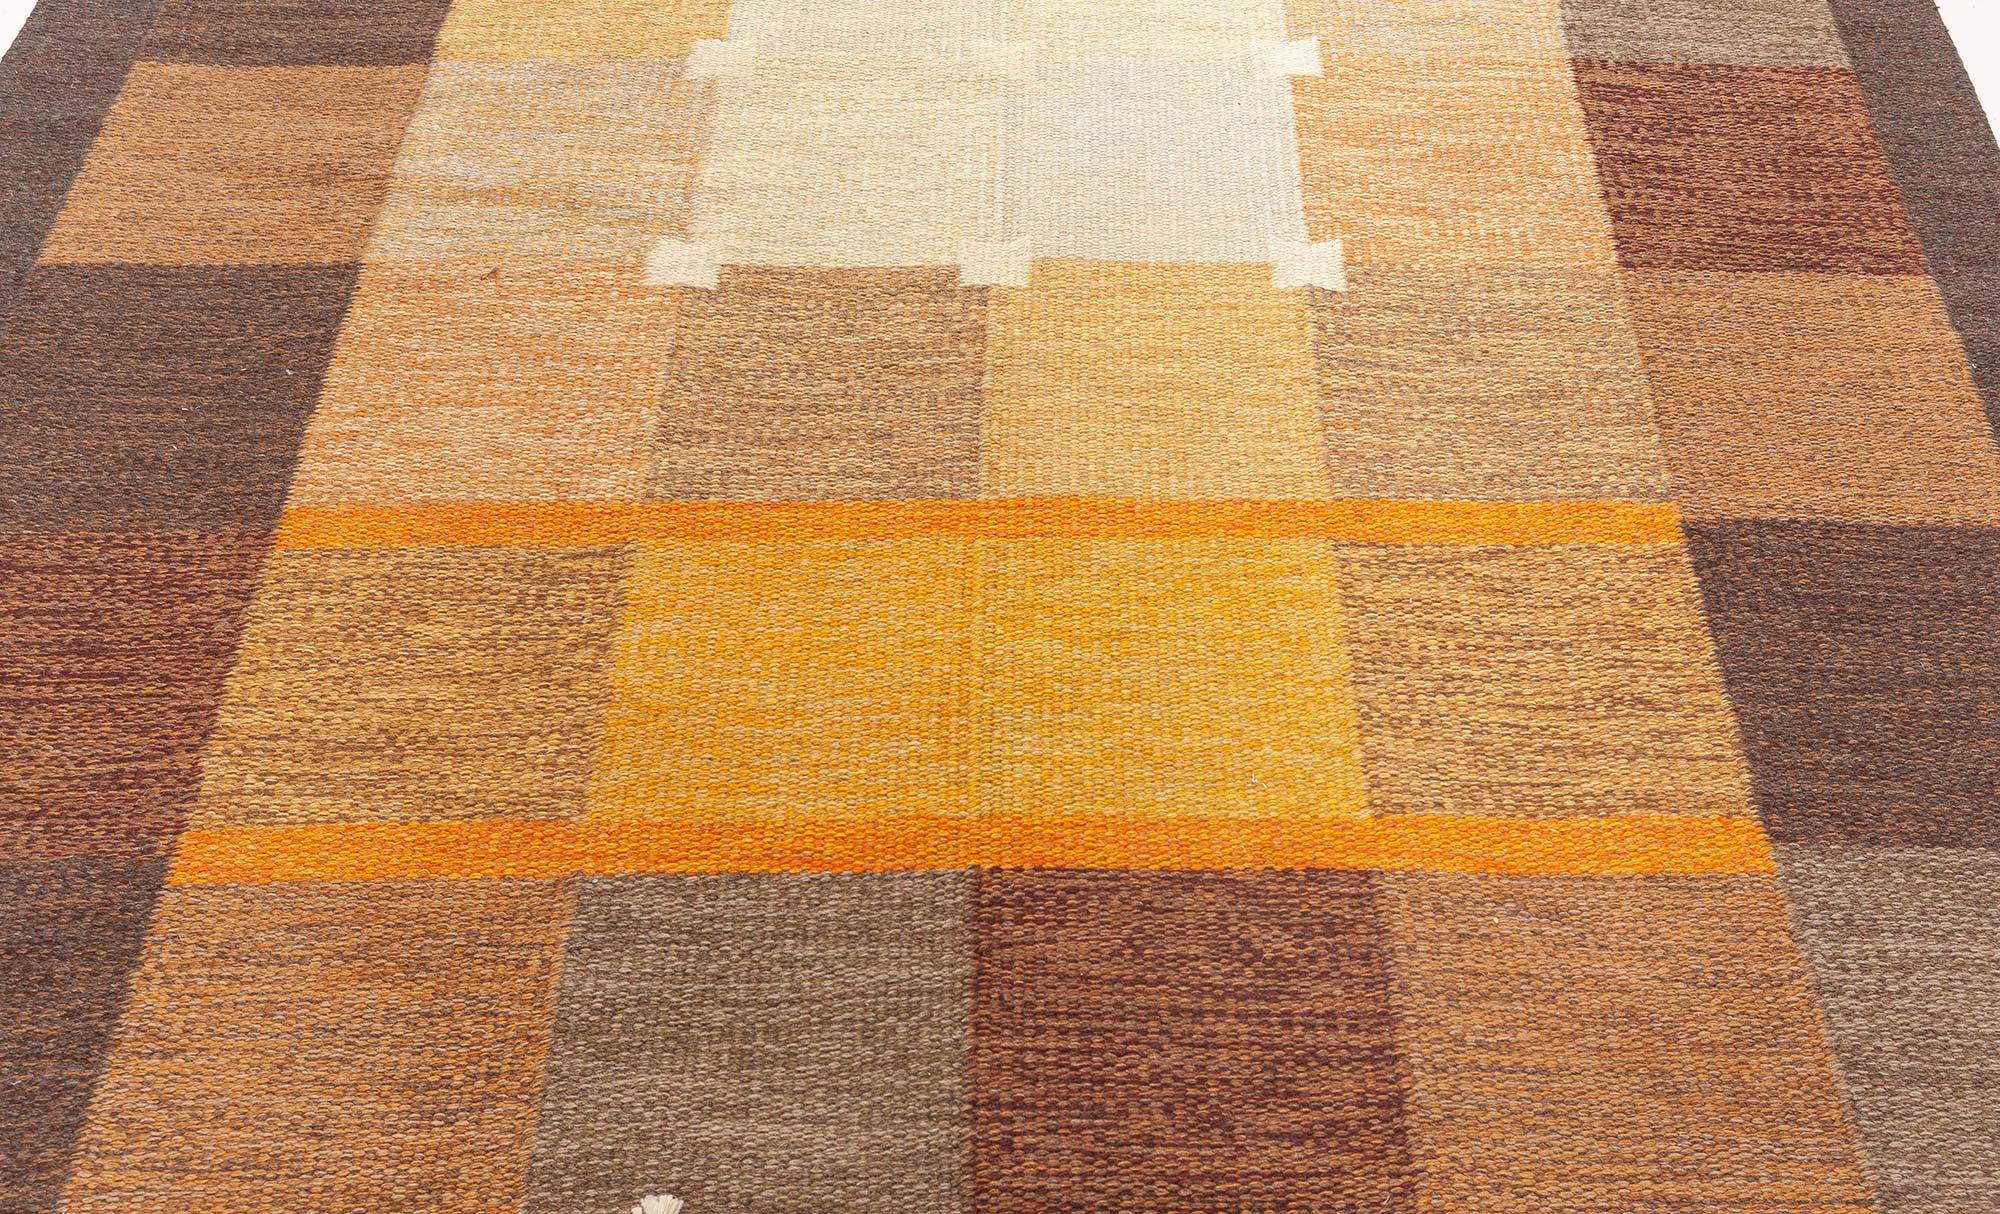 Vintage Swedish flat weave rug by Ulla Parkdal
Size: 5'2